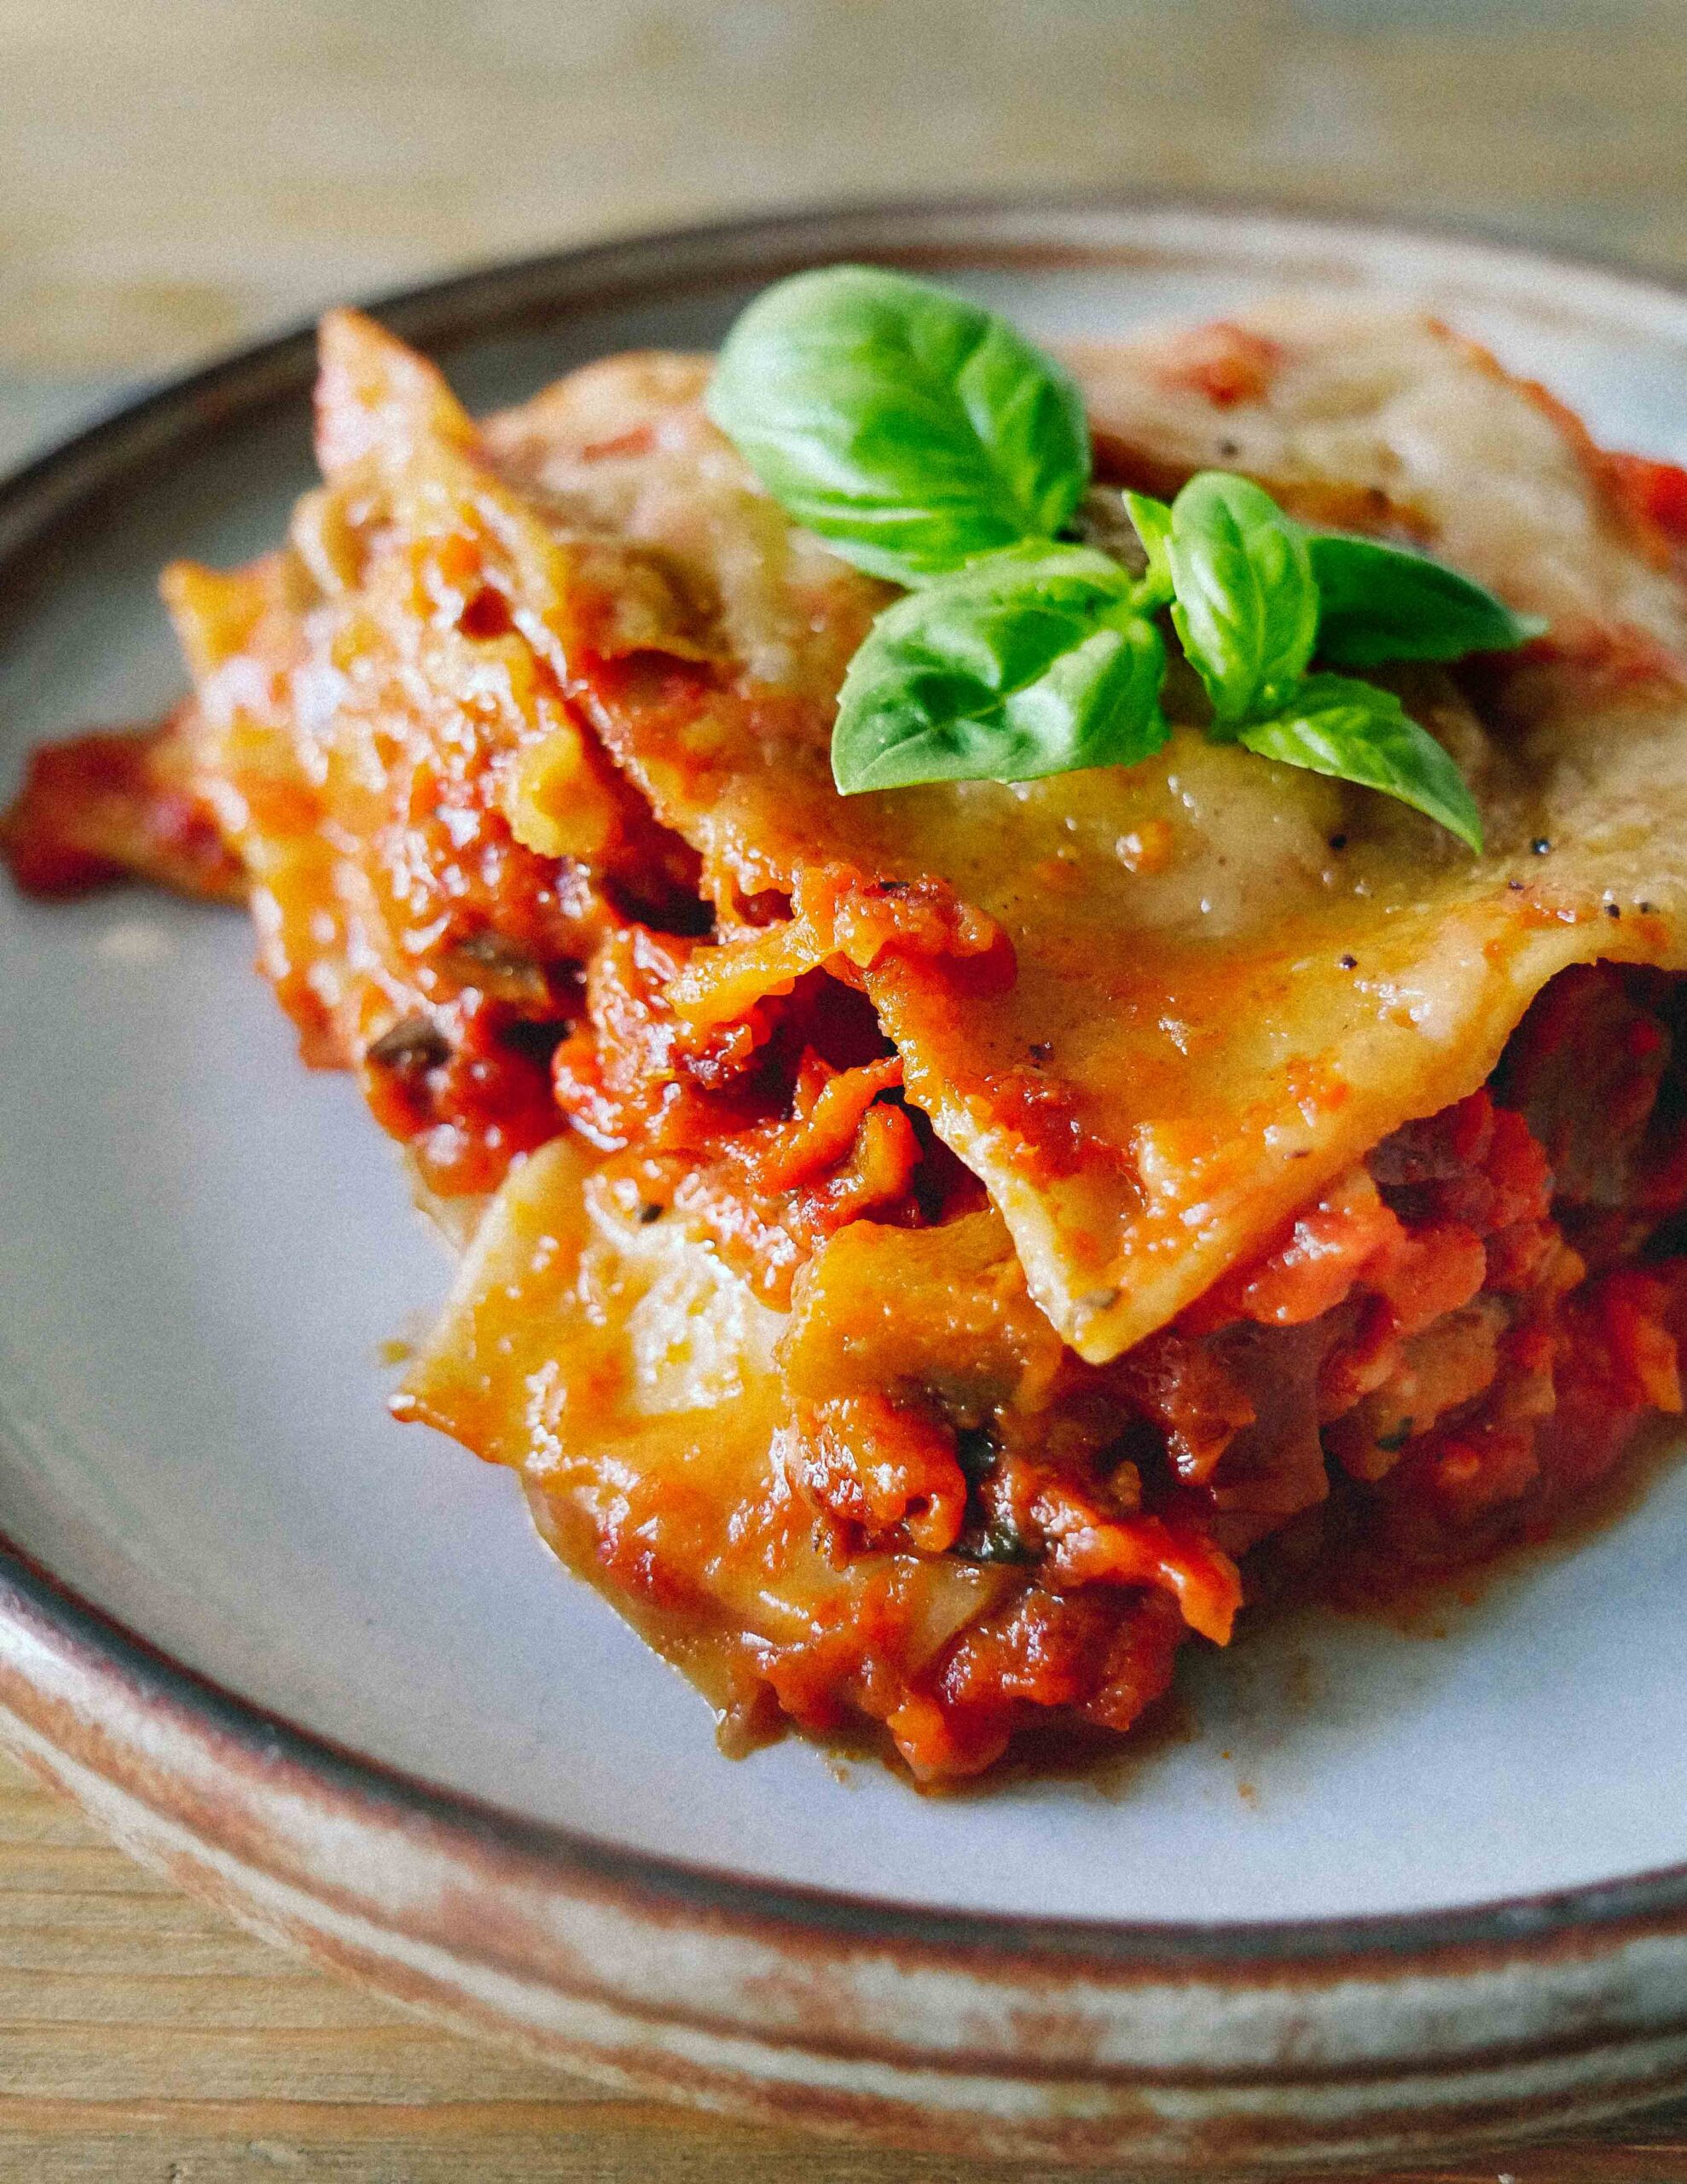 Vegan Lasagna – The ultimate homemade Italian recipe ↓